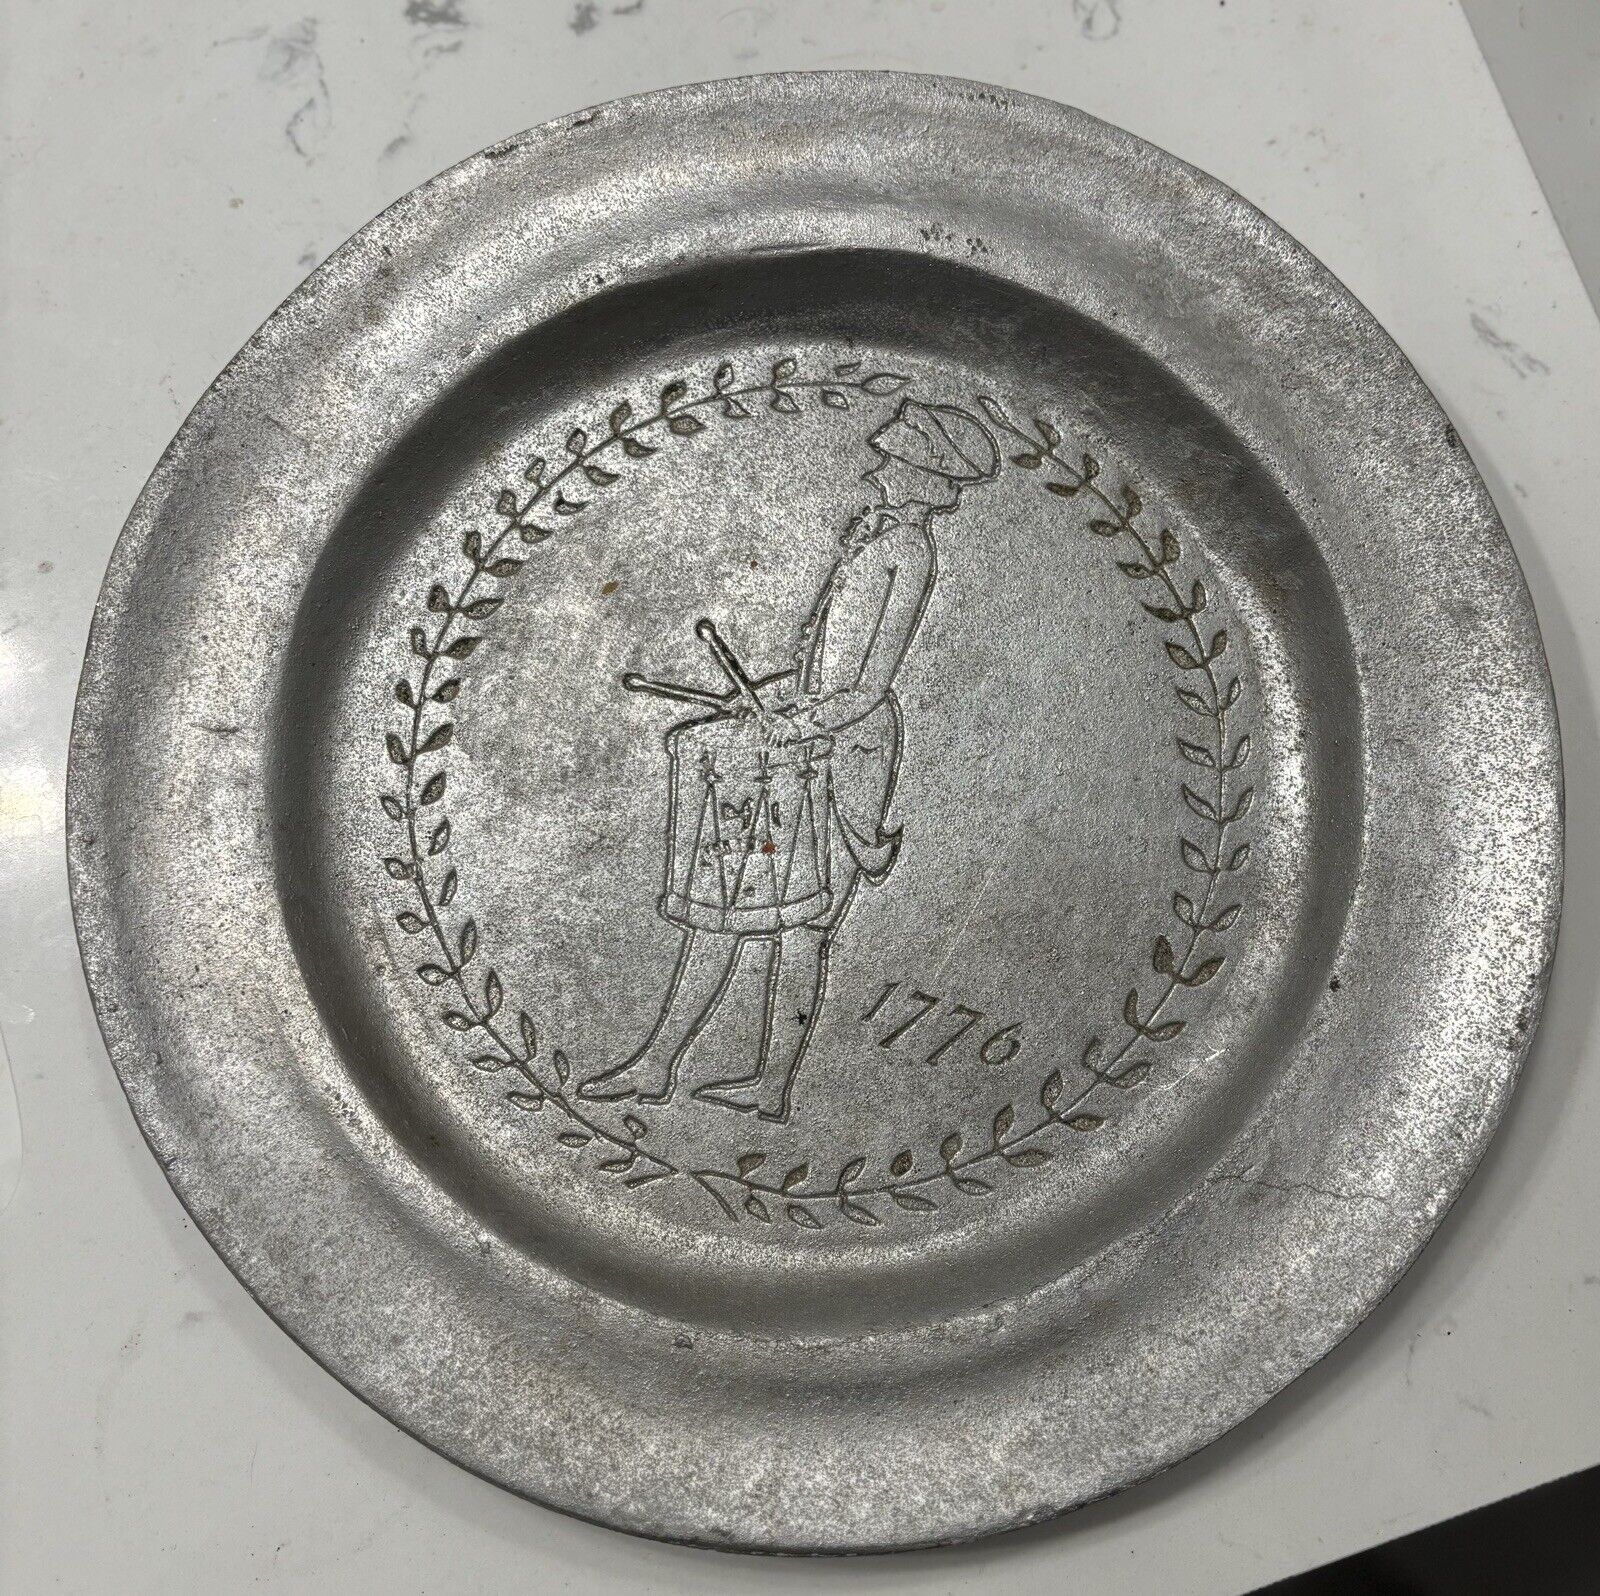 1776 soldier commemorative plate vintage